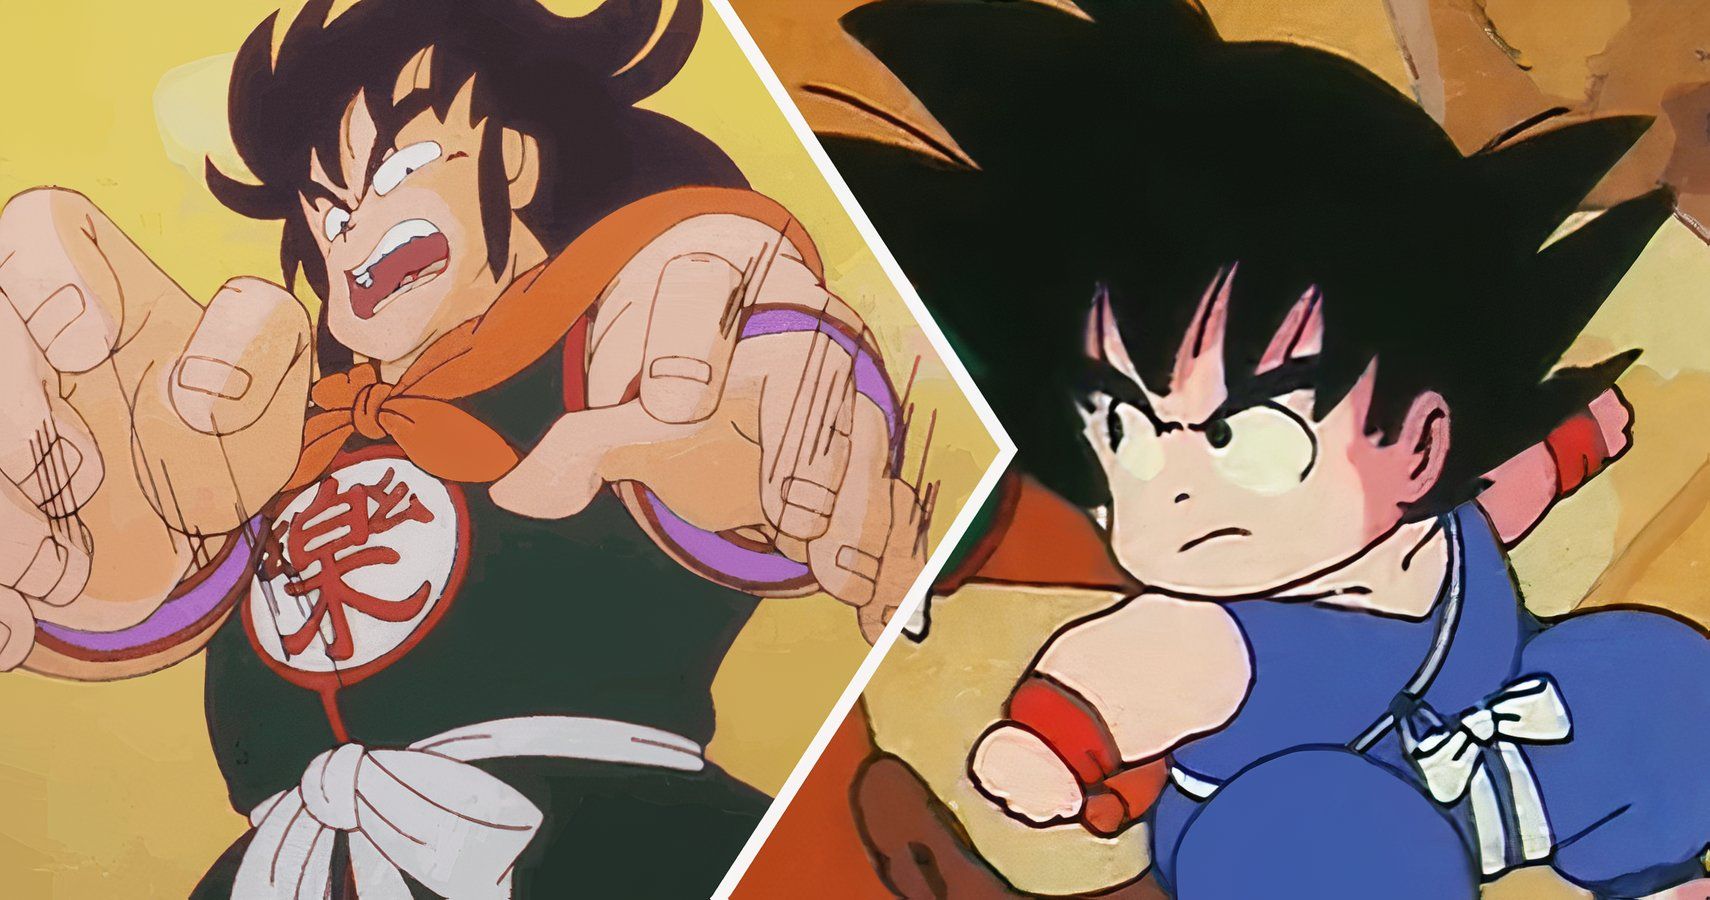 Yamcha vs Goku in the original Dragon Ball anime